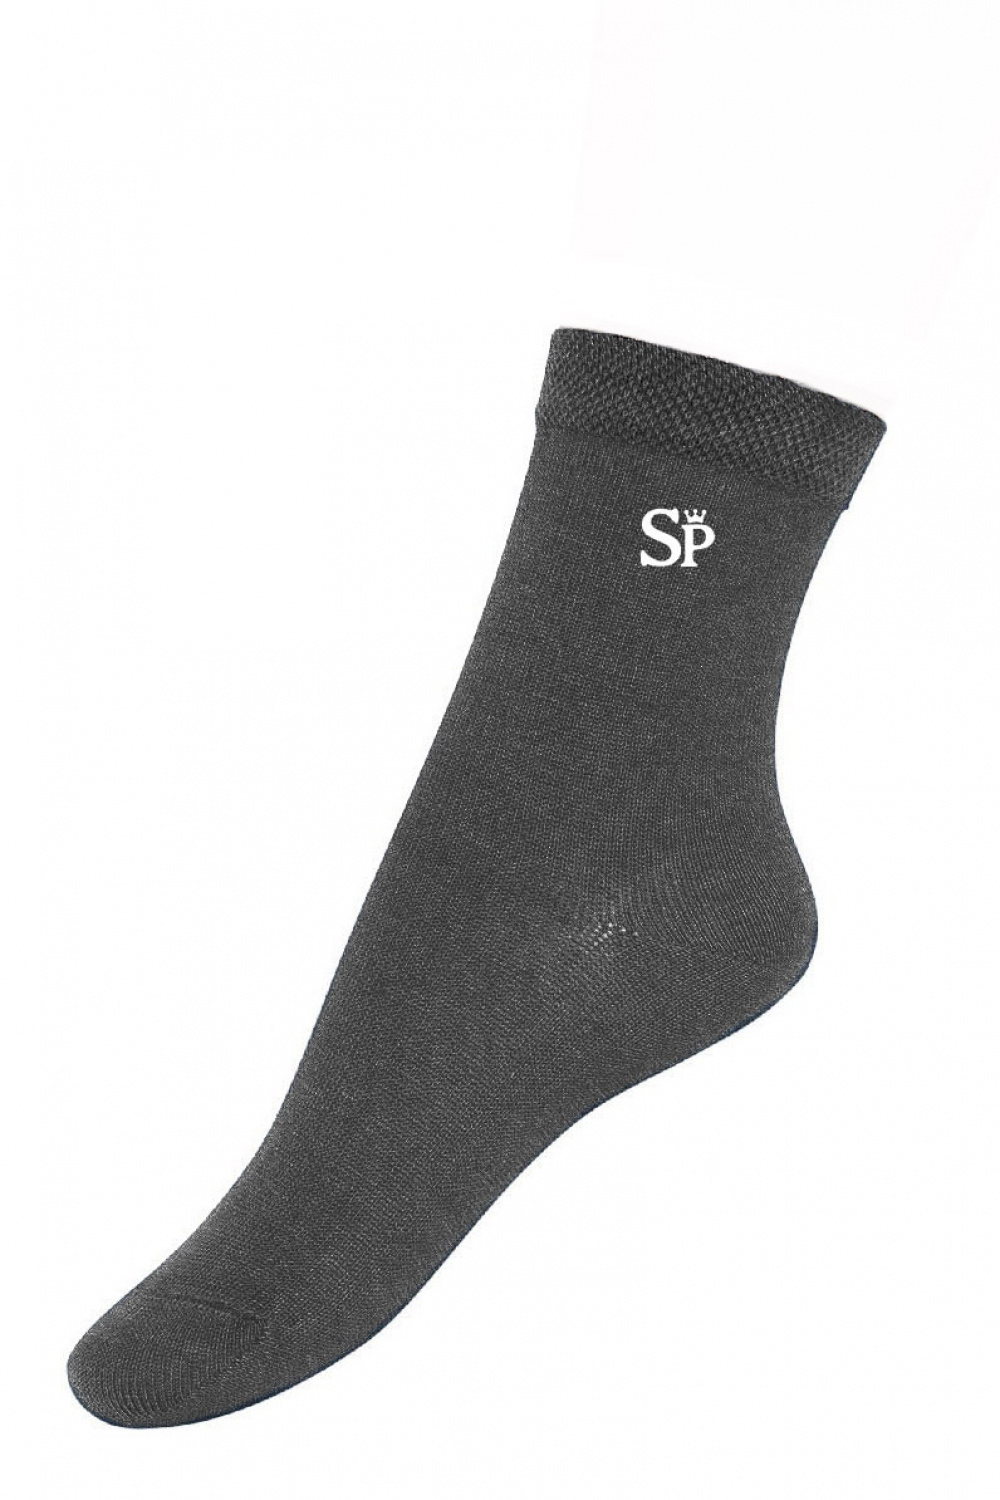 Хлопковые носки (SAFSB-707-19201-804) Silver spoon